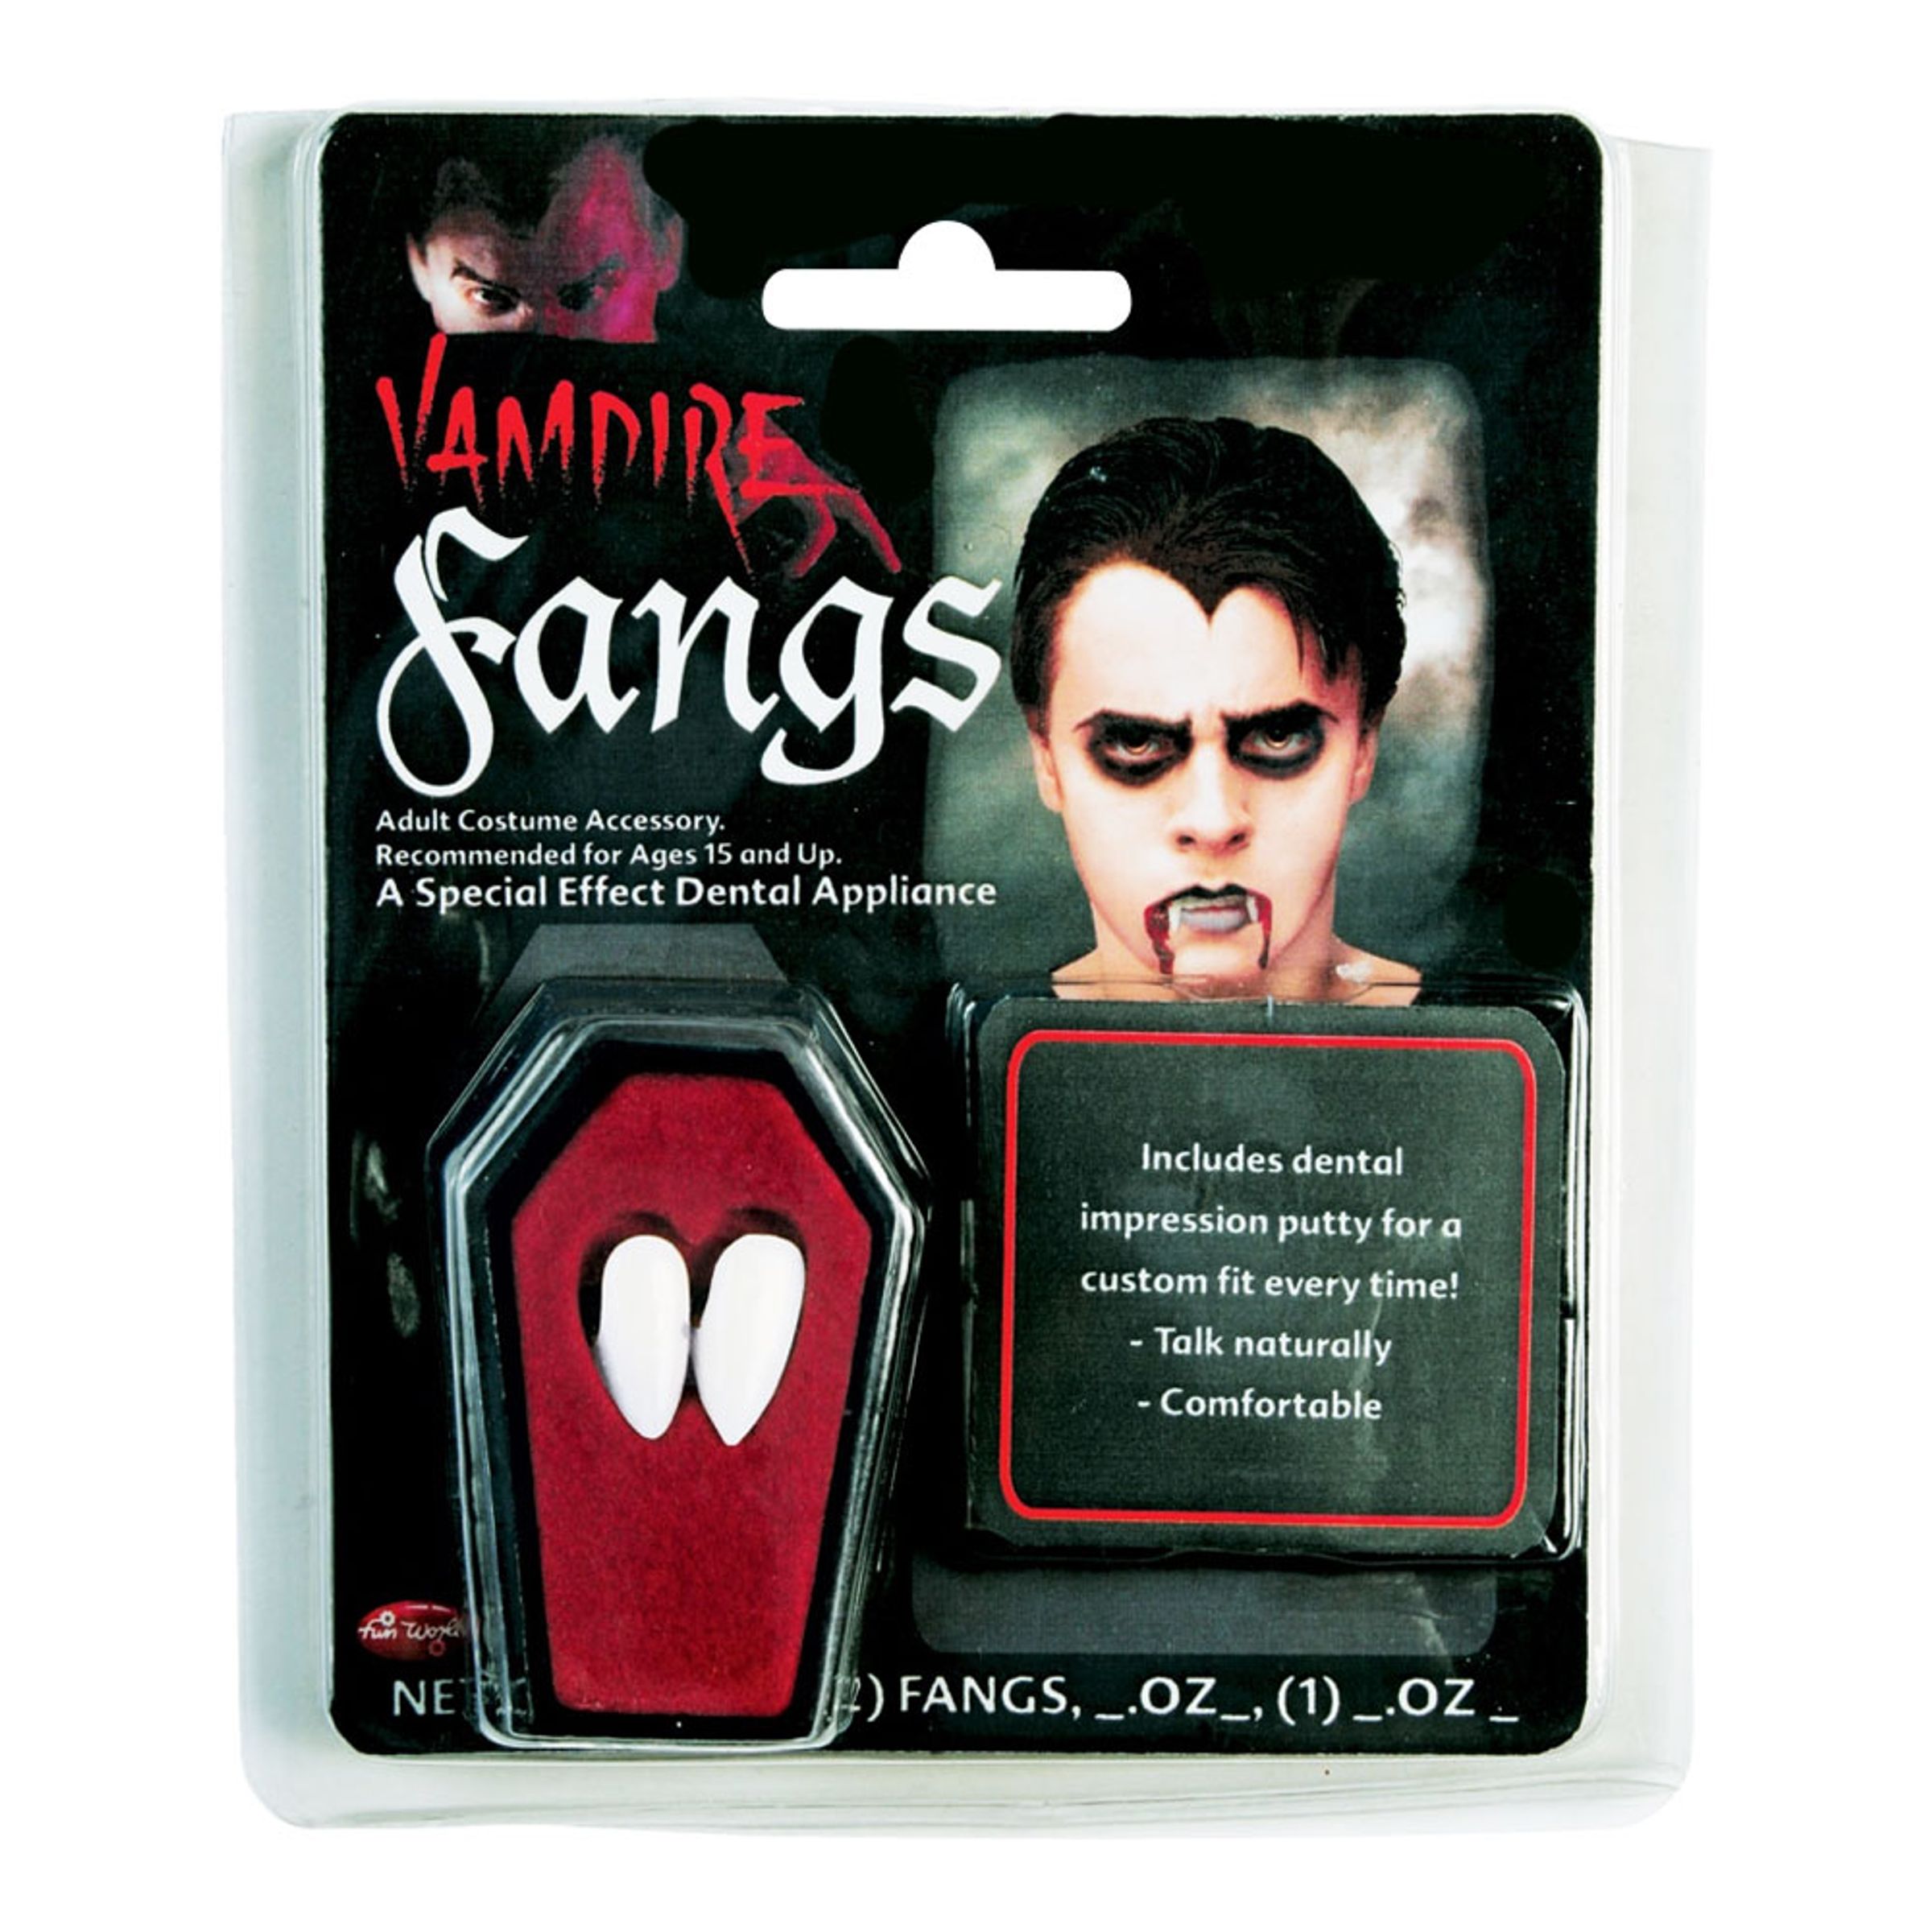 Vampyr Stifttänder